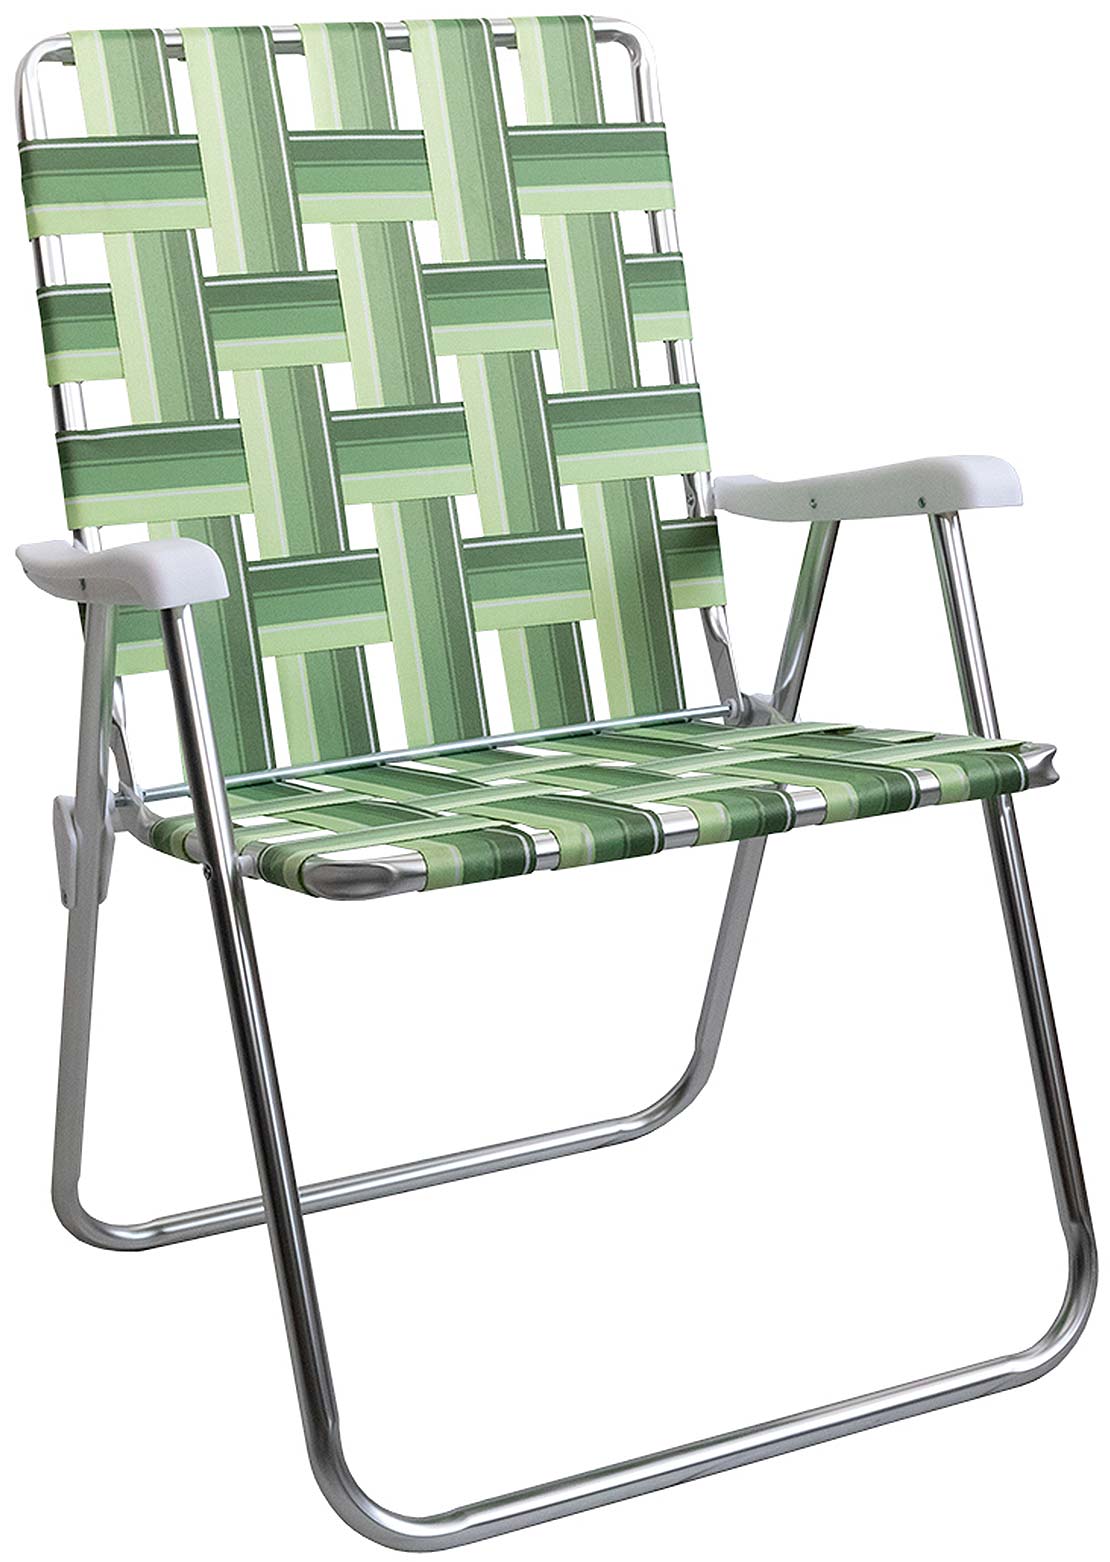 Kuma Outdoor Gear Leo Backtrack Chair Green/Lime